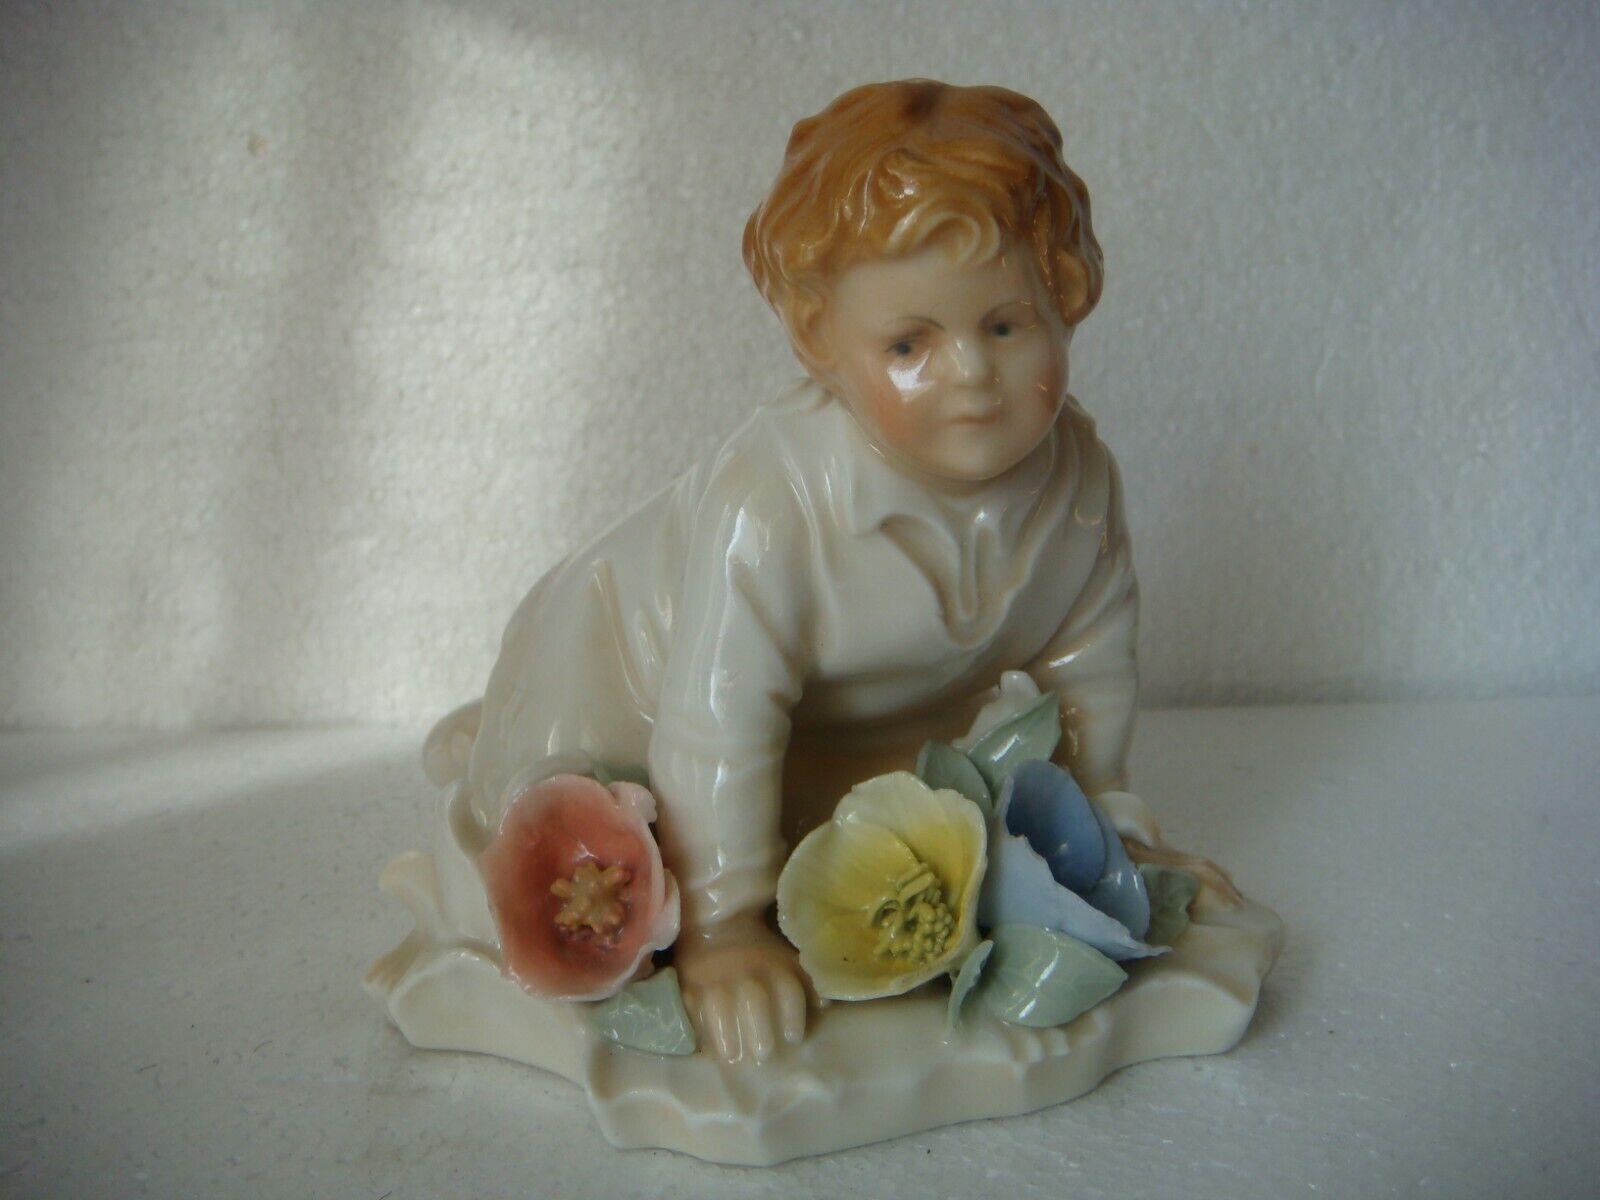 RRR RARE Karl Ens Volkstedt Porcelain German Figurine Boy with Flowers